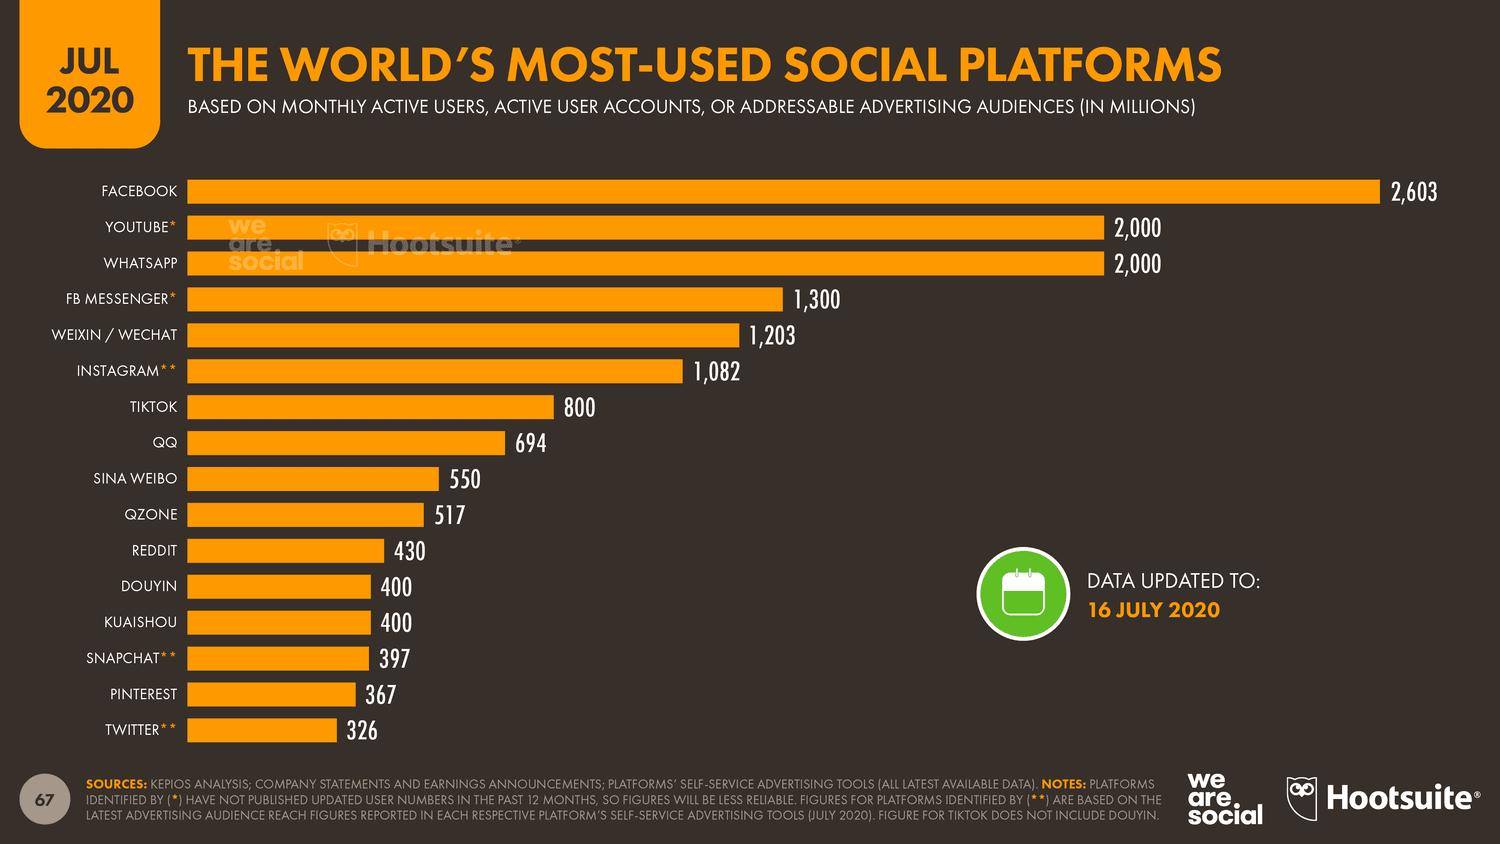 3.96 Billion People around the World Now Use Social Media Platforms